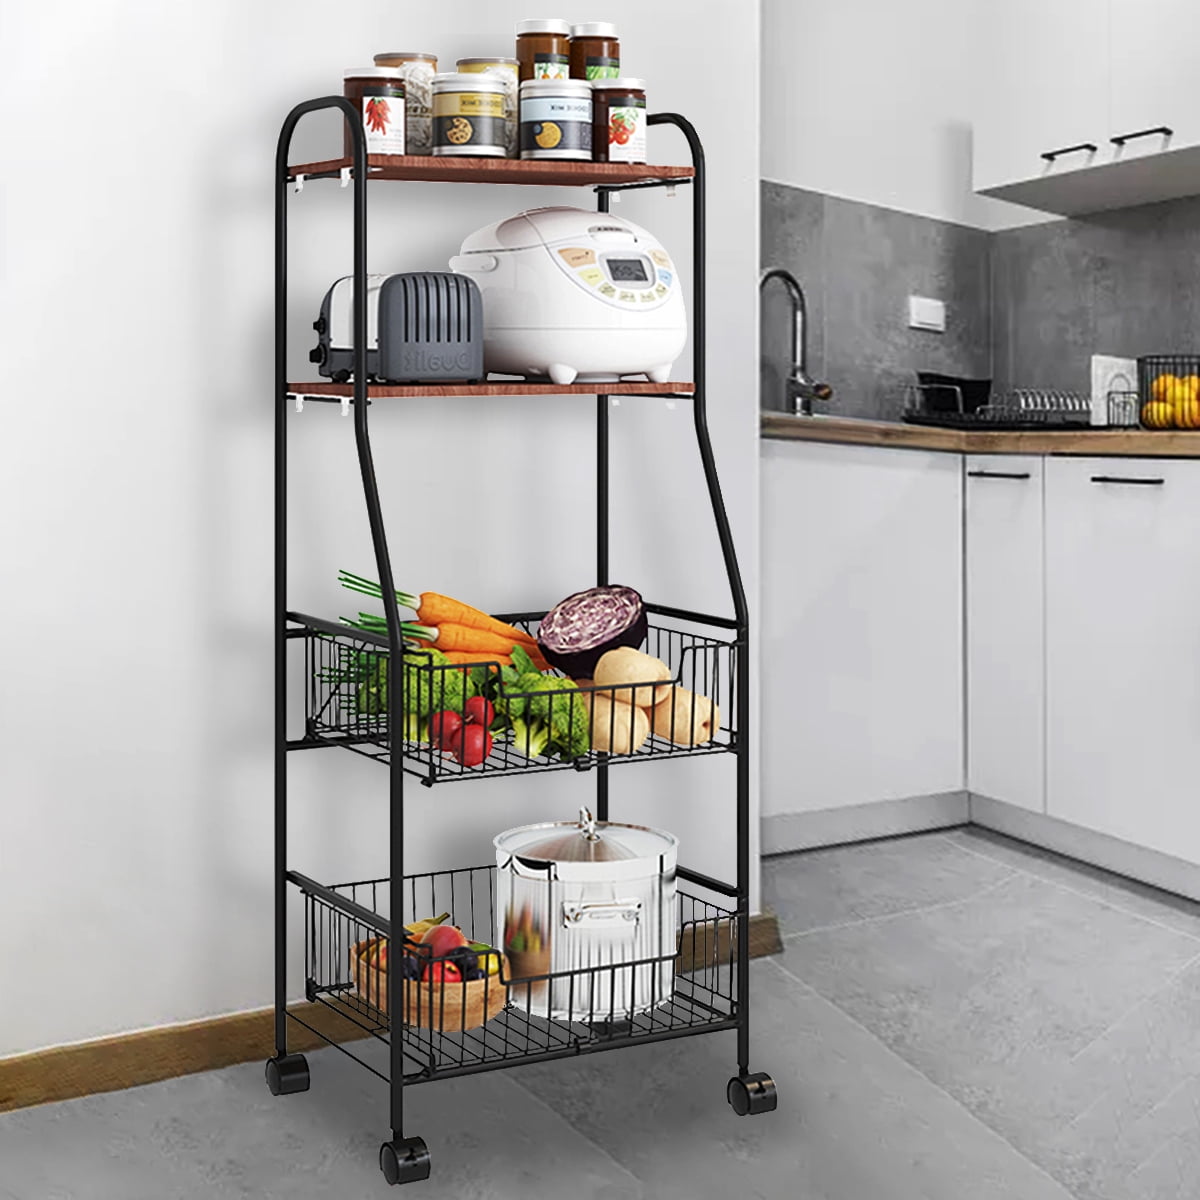 Details about   6 Tier Layer Shelving Rack Adjustable Shelf Storage Kitchen Home Standing 